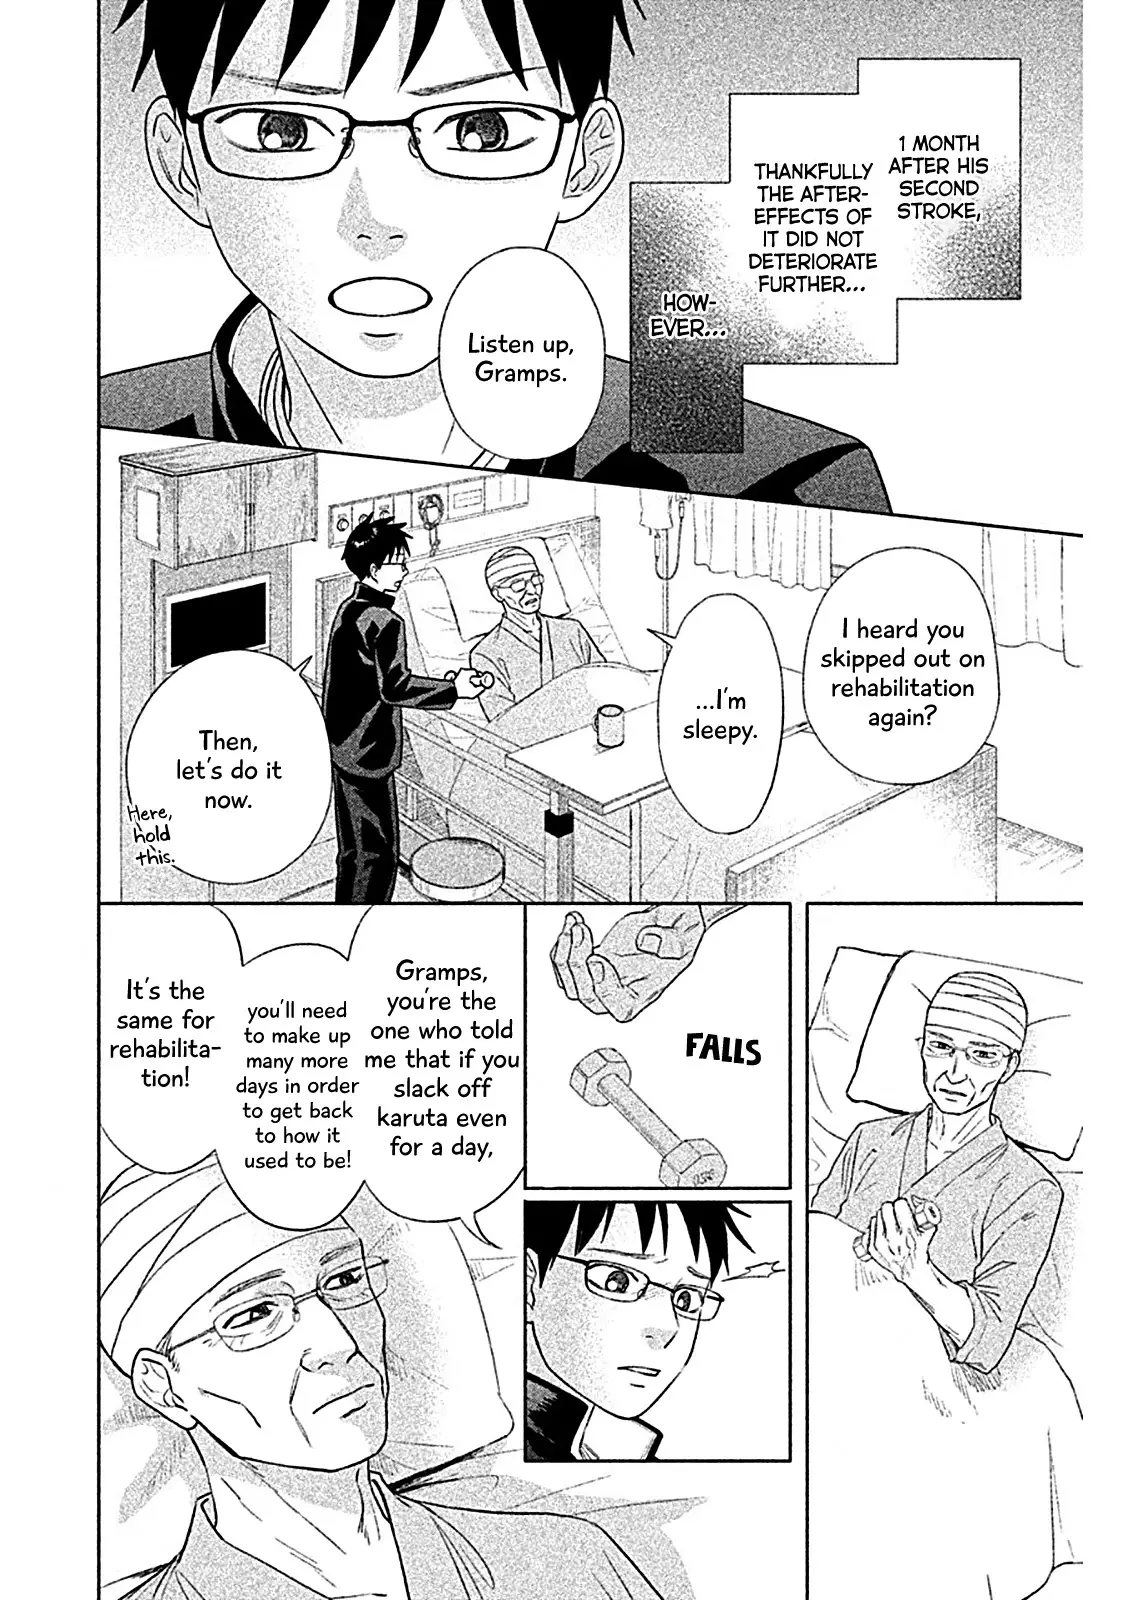 Chihayafuru: Middle School Arc - 8 page 4